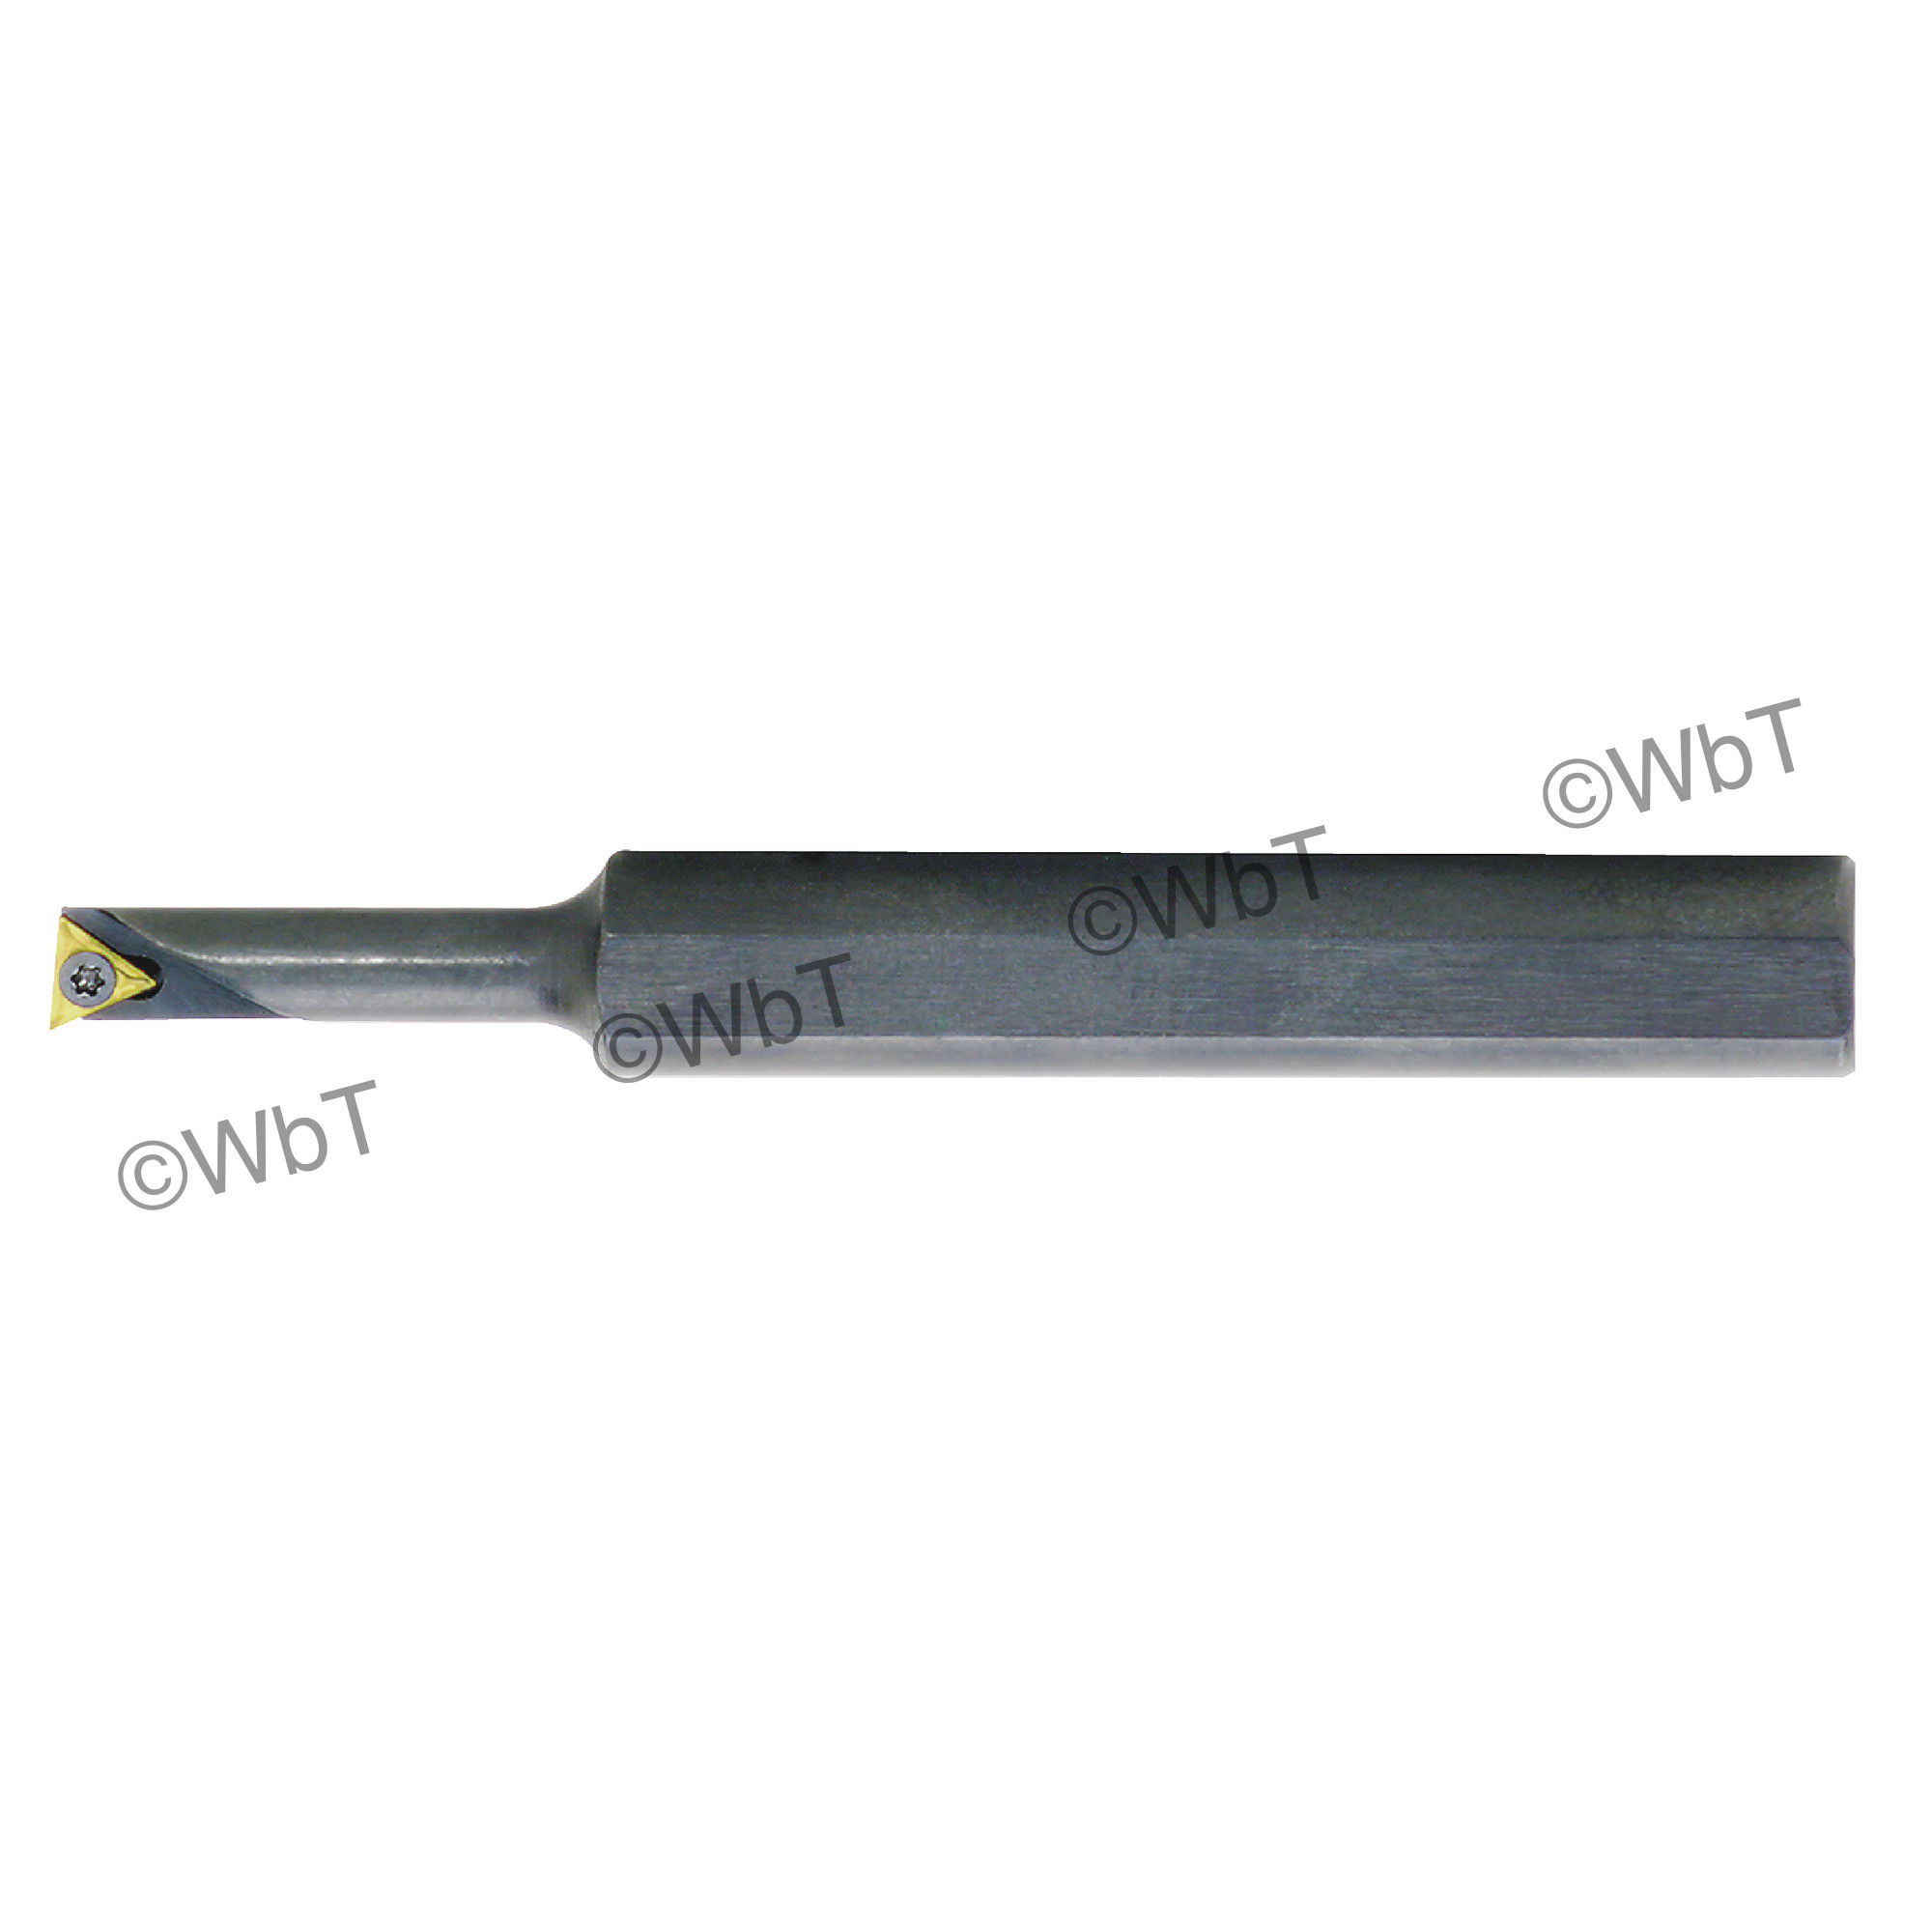 TTC PRODUCTION - NBS6-5-2 / Steel Boring Bar / 0.500@QUOT: Shank / TCMT1.210.5 / Right Hand